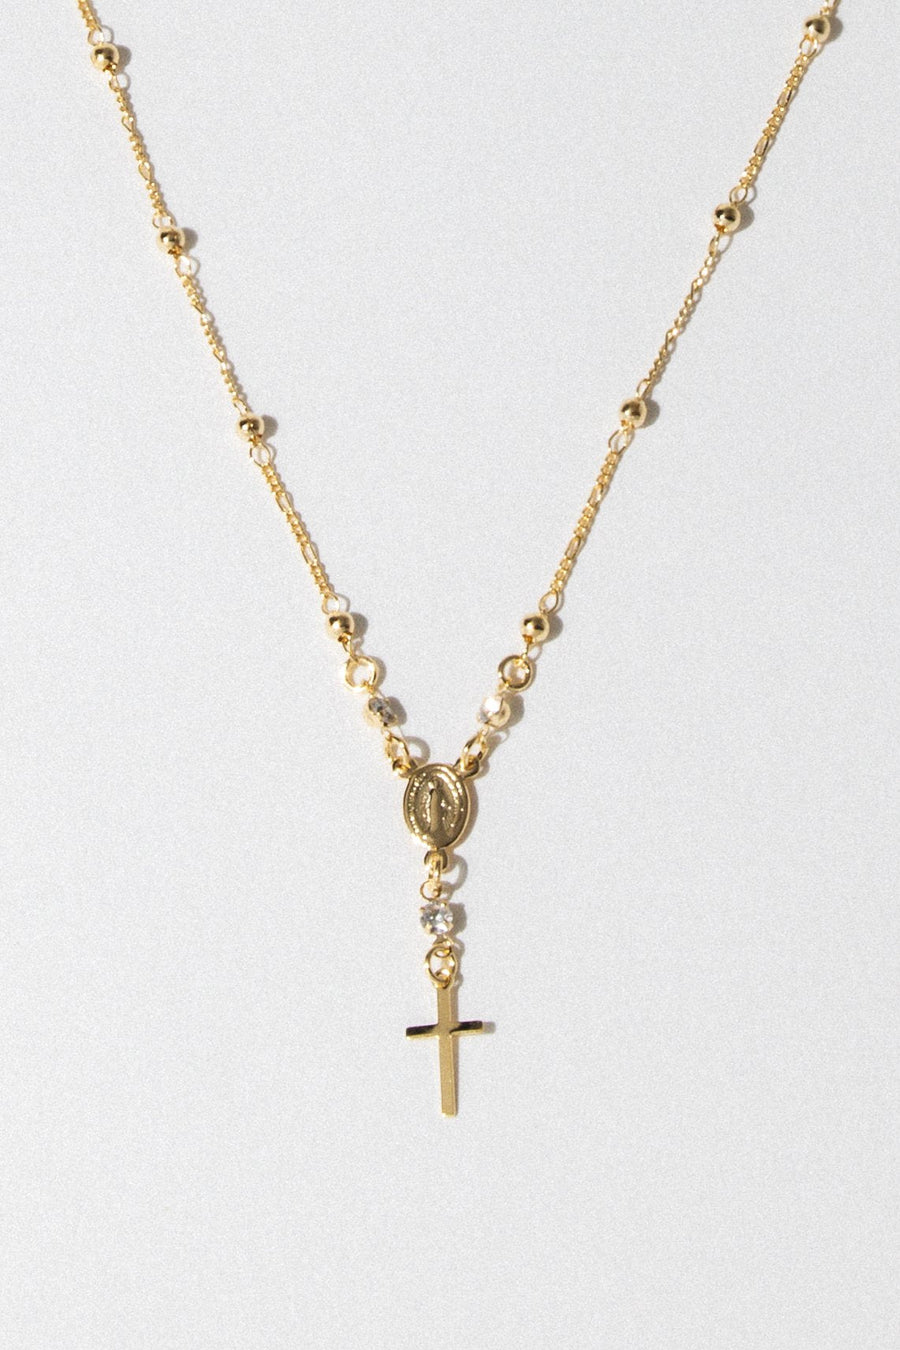 Dona Italia Jewelry Gold / 18 Inches / CZ Rhinestones Positano Rosary Necklace